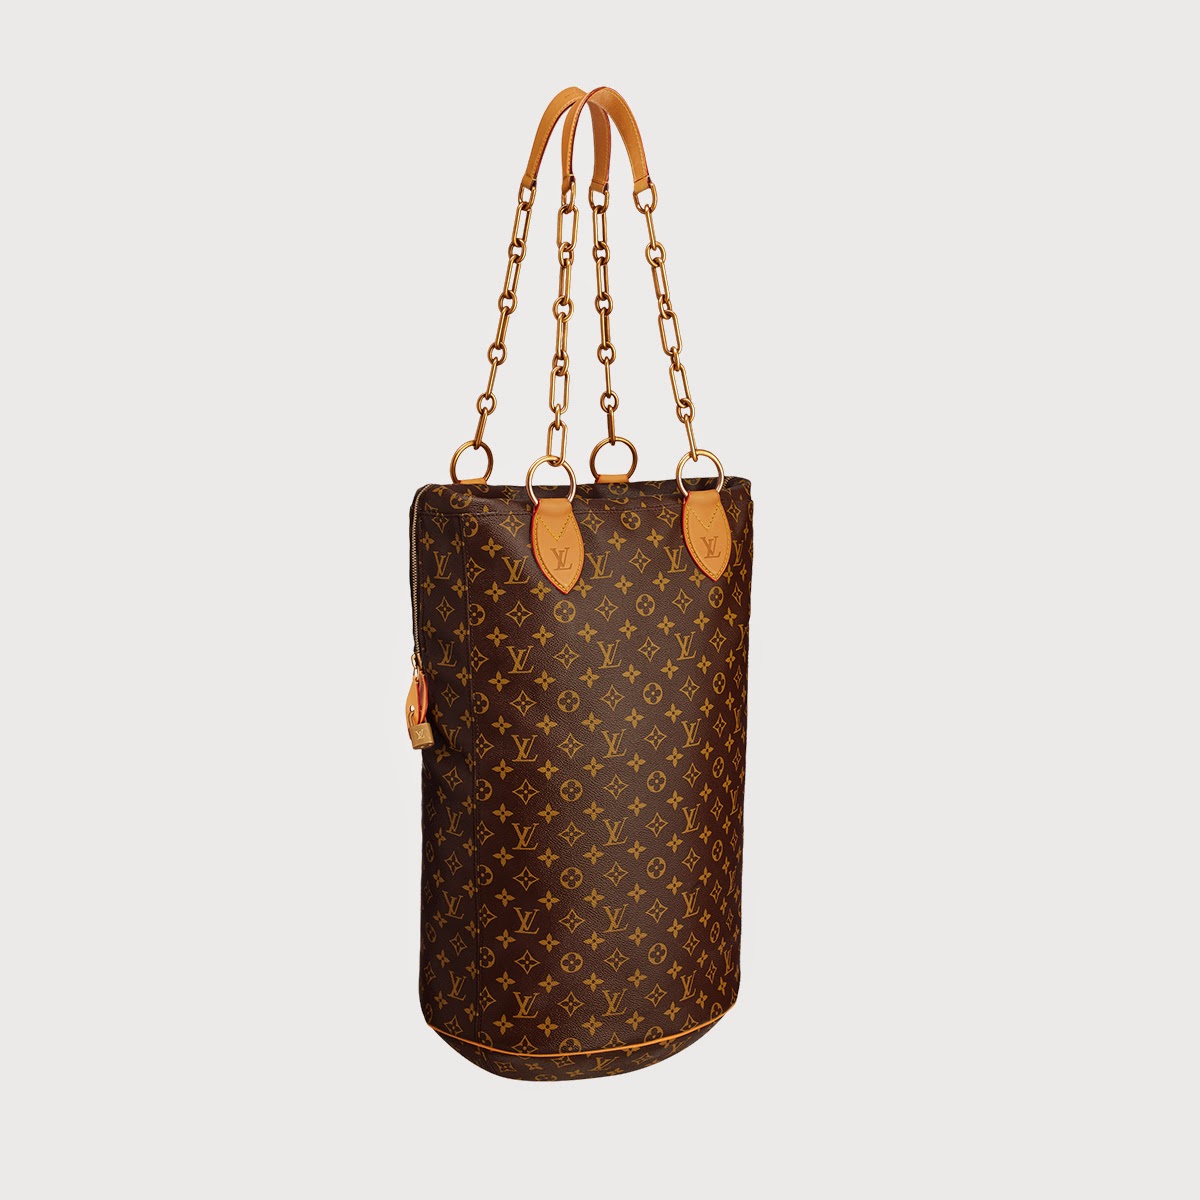 Shanina-Shaik-Louis-Vuitton-Monogram-Keepall-Bag  Louis vuitton handbags,  Fashion, Vintage louis vuitton handbags